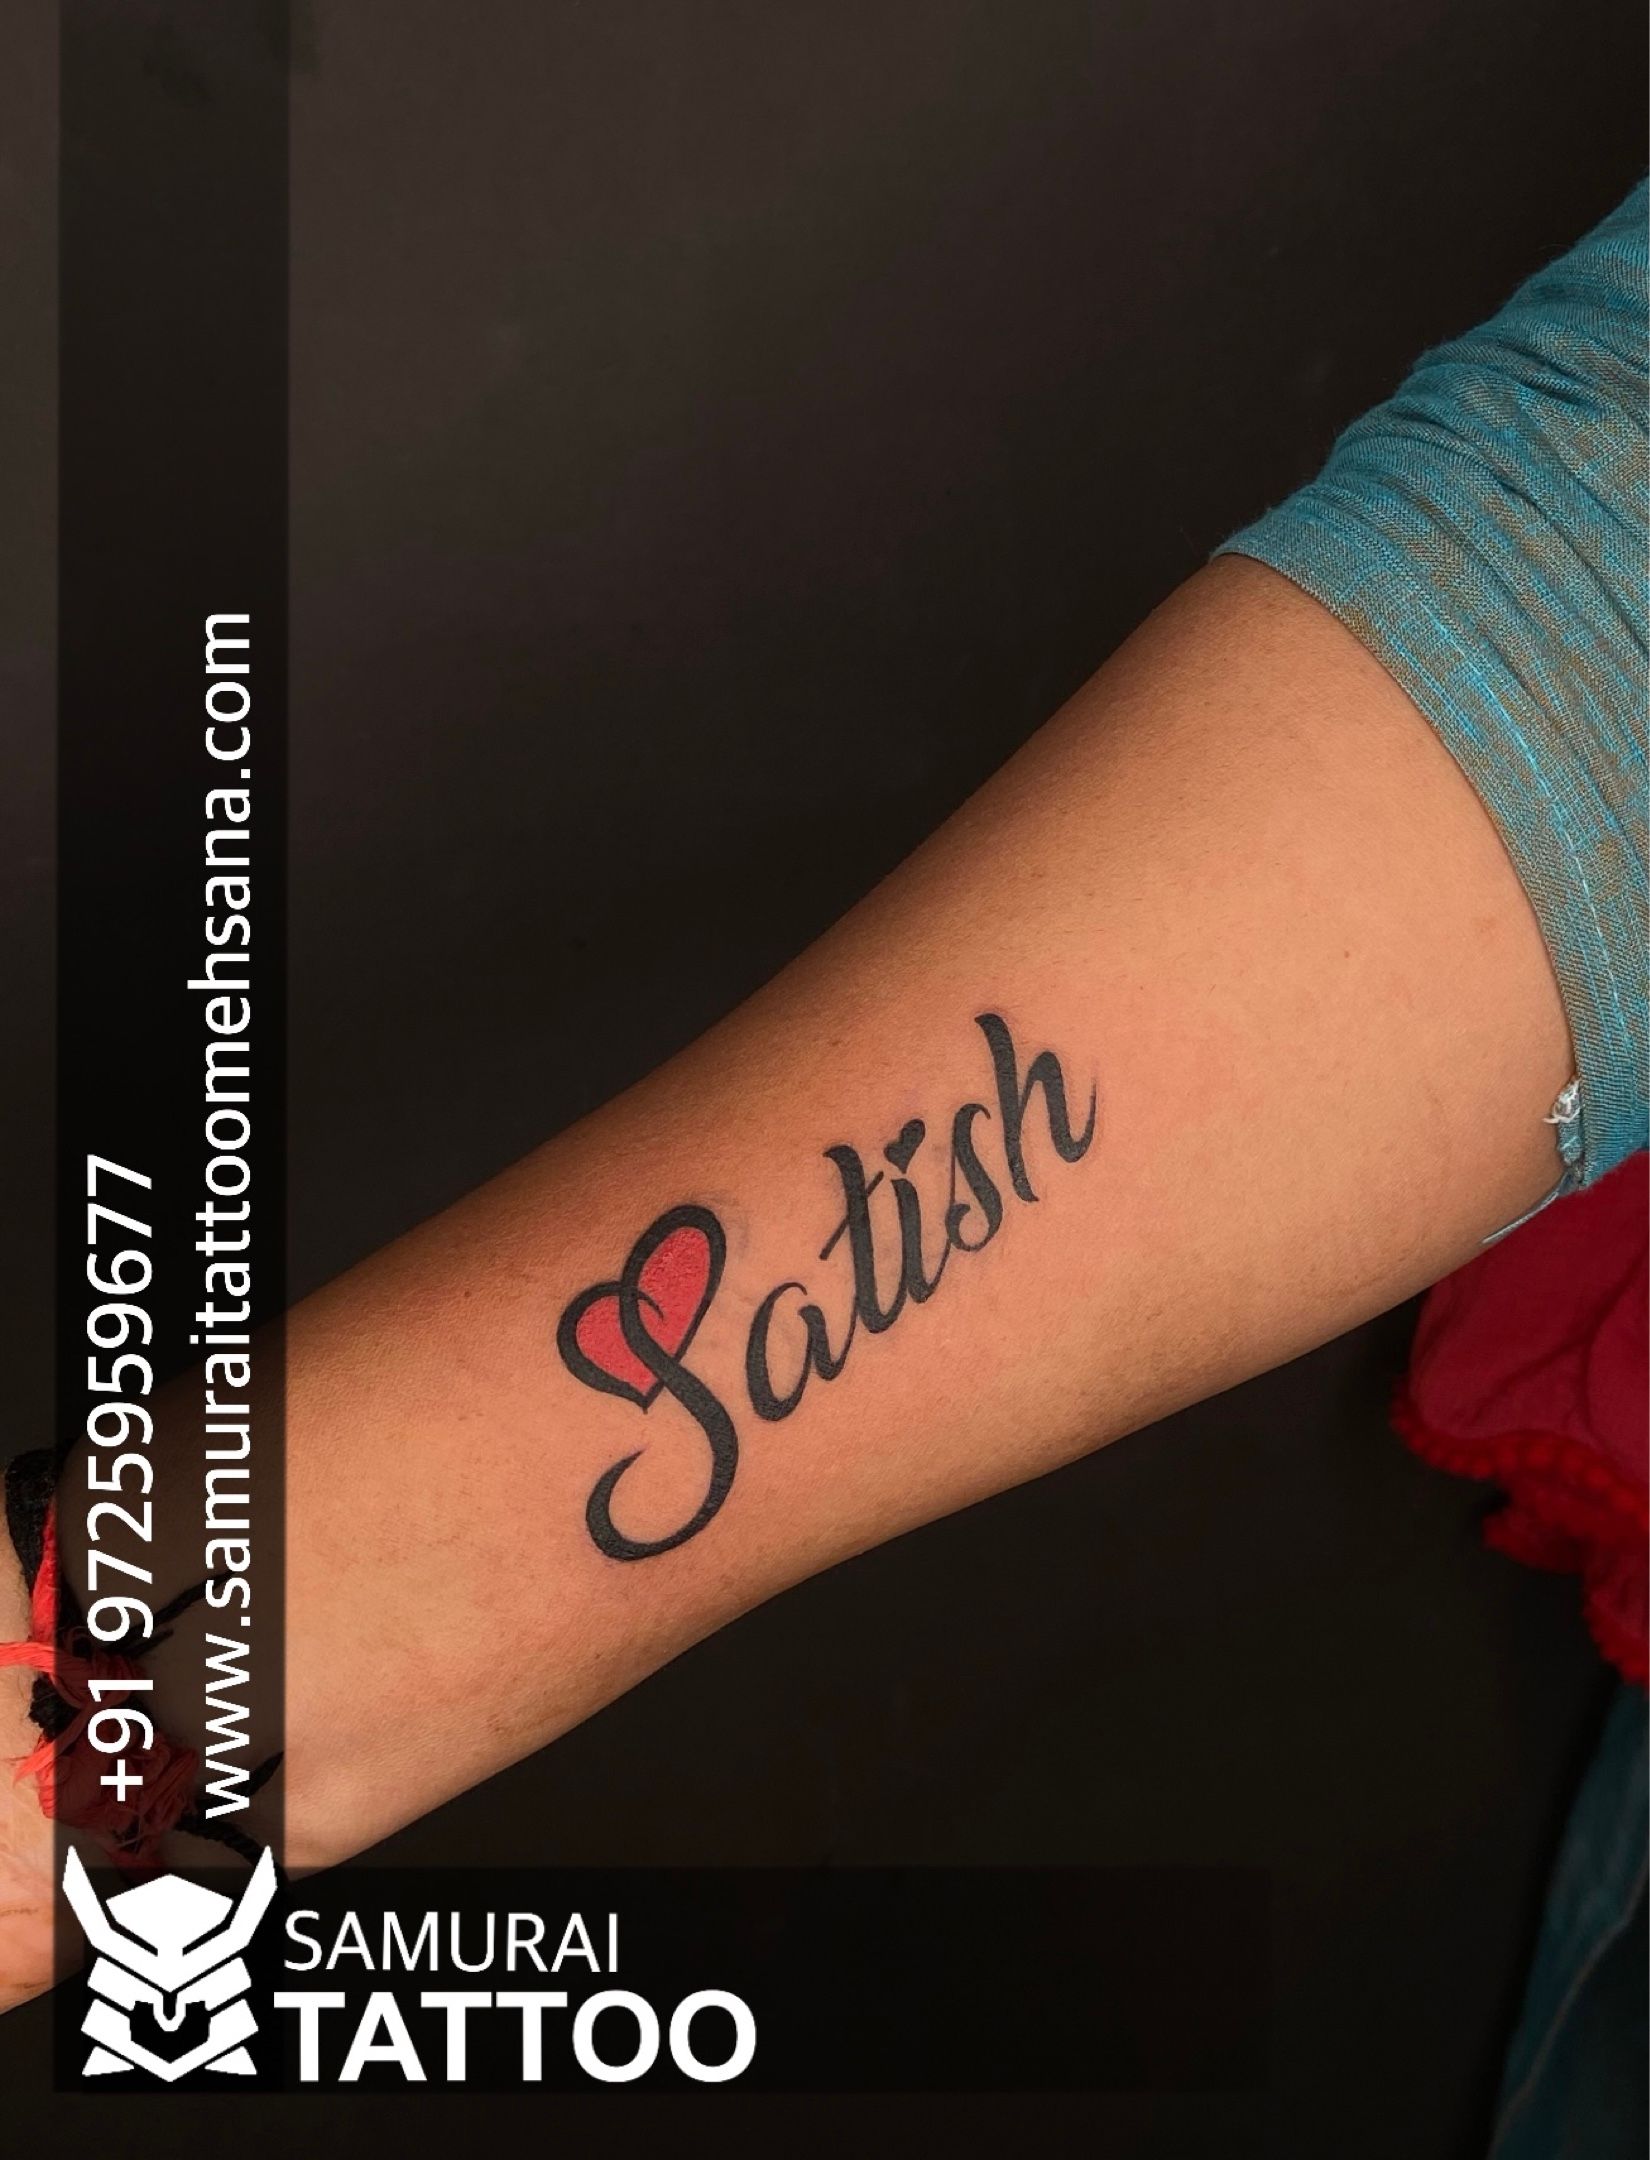 satish nametattoo fontstyle nameart tattoo tattooed girlslove  girltattoos inkedgirls nam  Tattoo designs wrist Chest tattoo name  All seeing eye tattoo